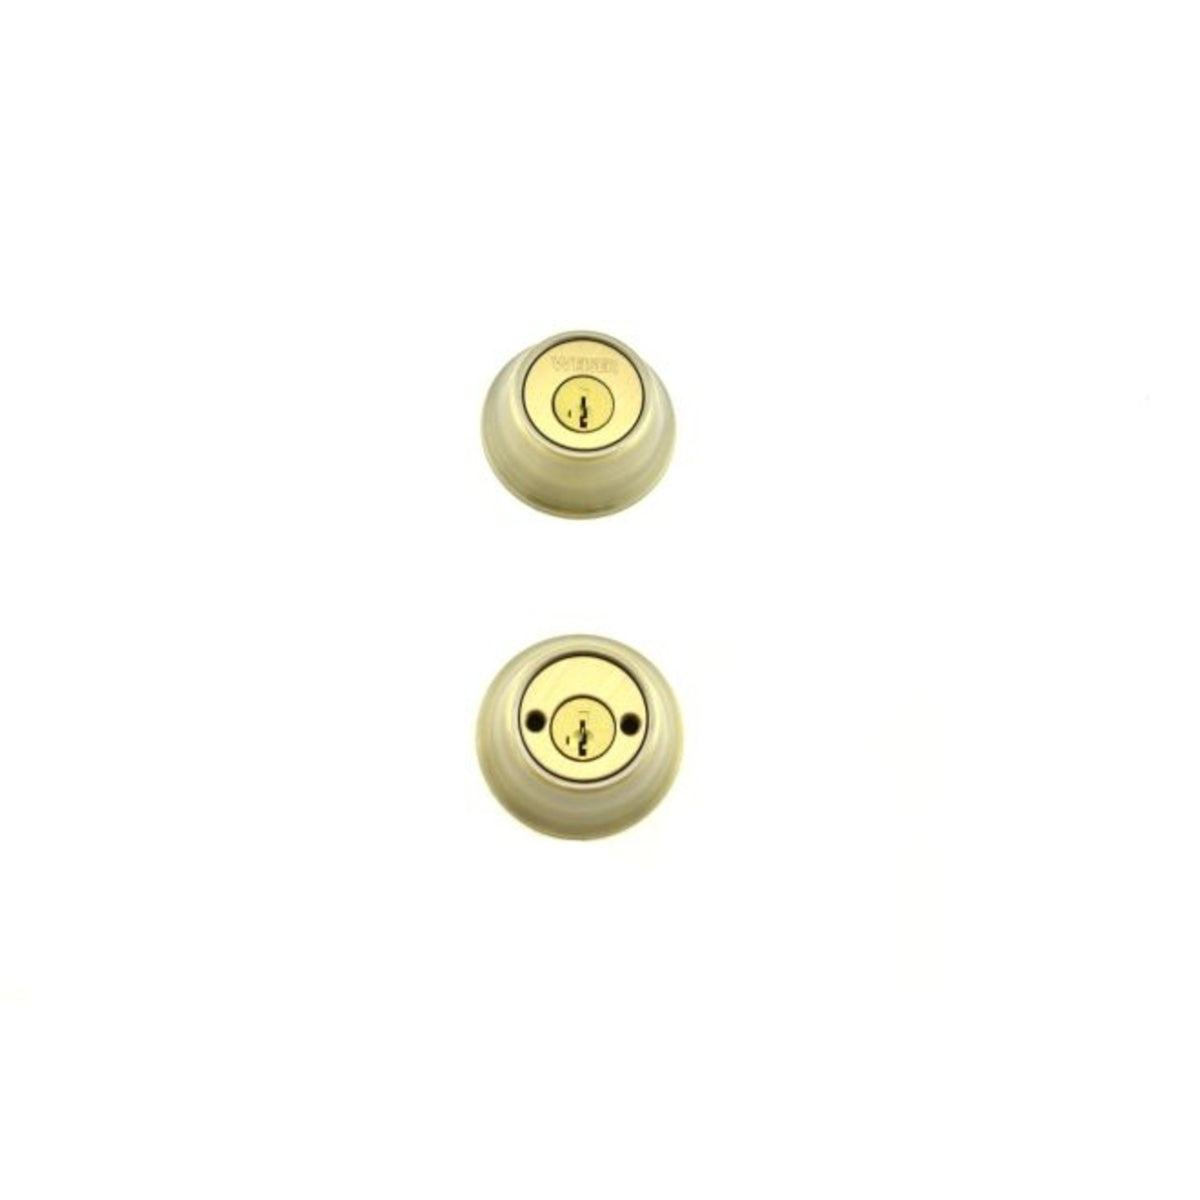 Weiser Lock GDC93715S Double Cylinder Deadbolt With Smart Key, Antique Brass